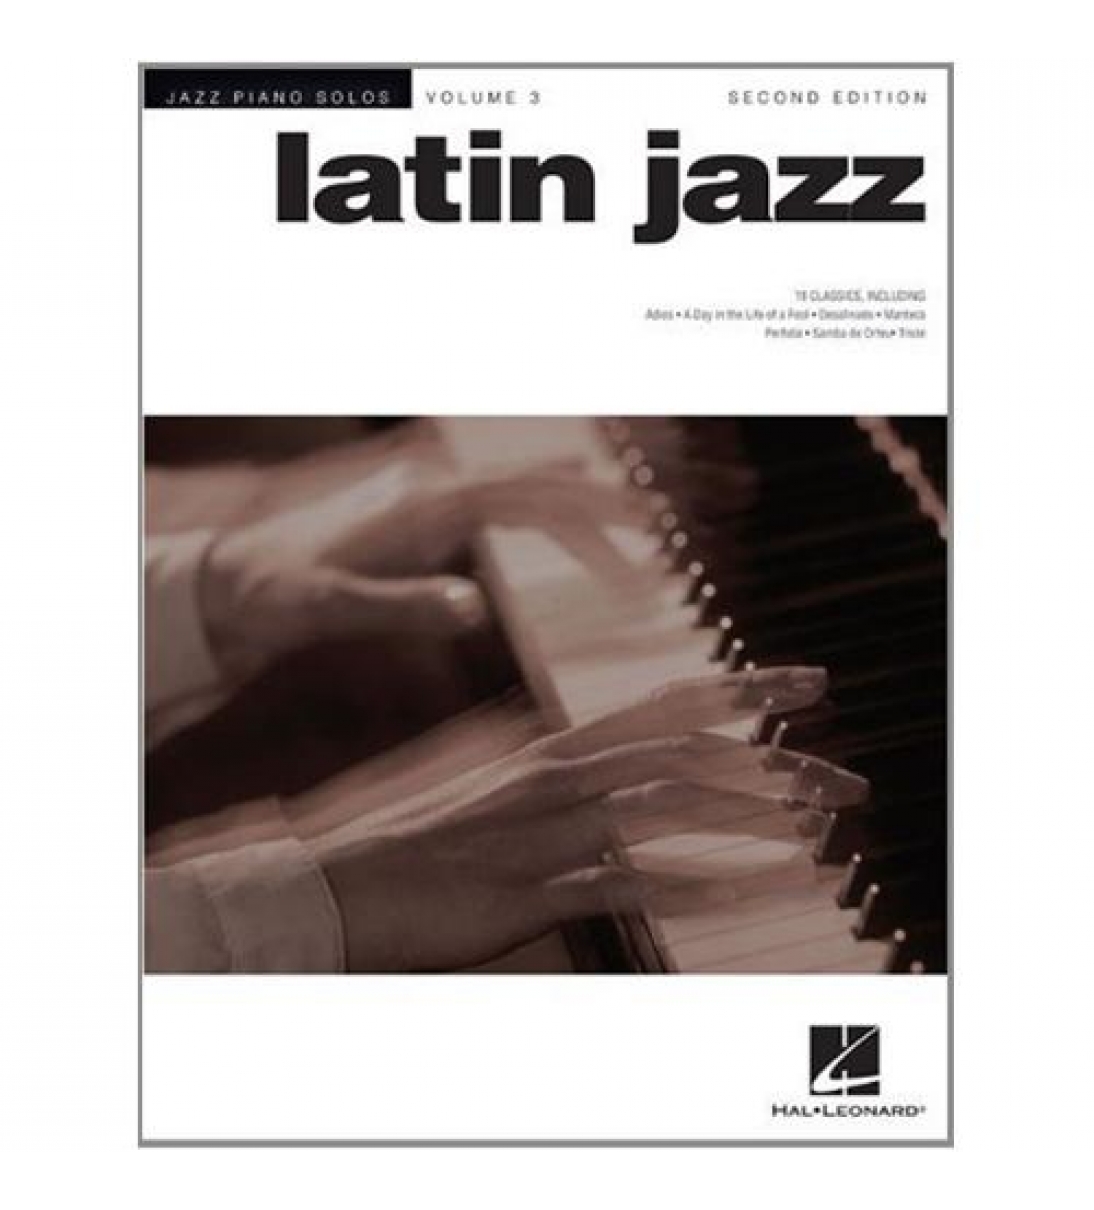  Jazz piano solos - Vol. 3, Latin jazz, second edition